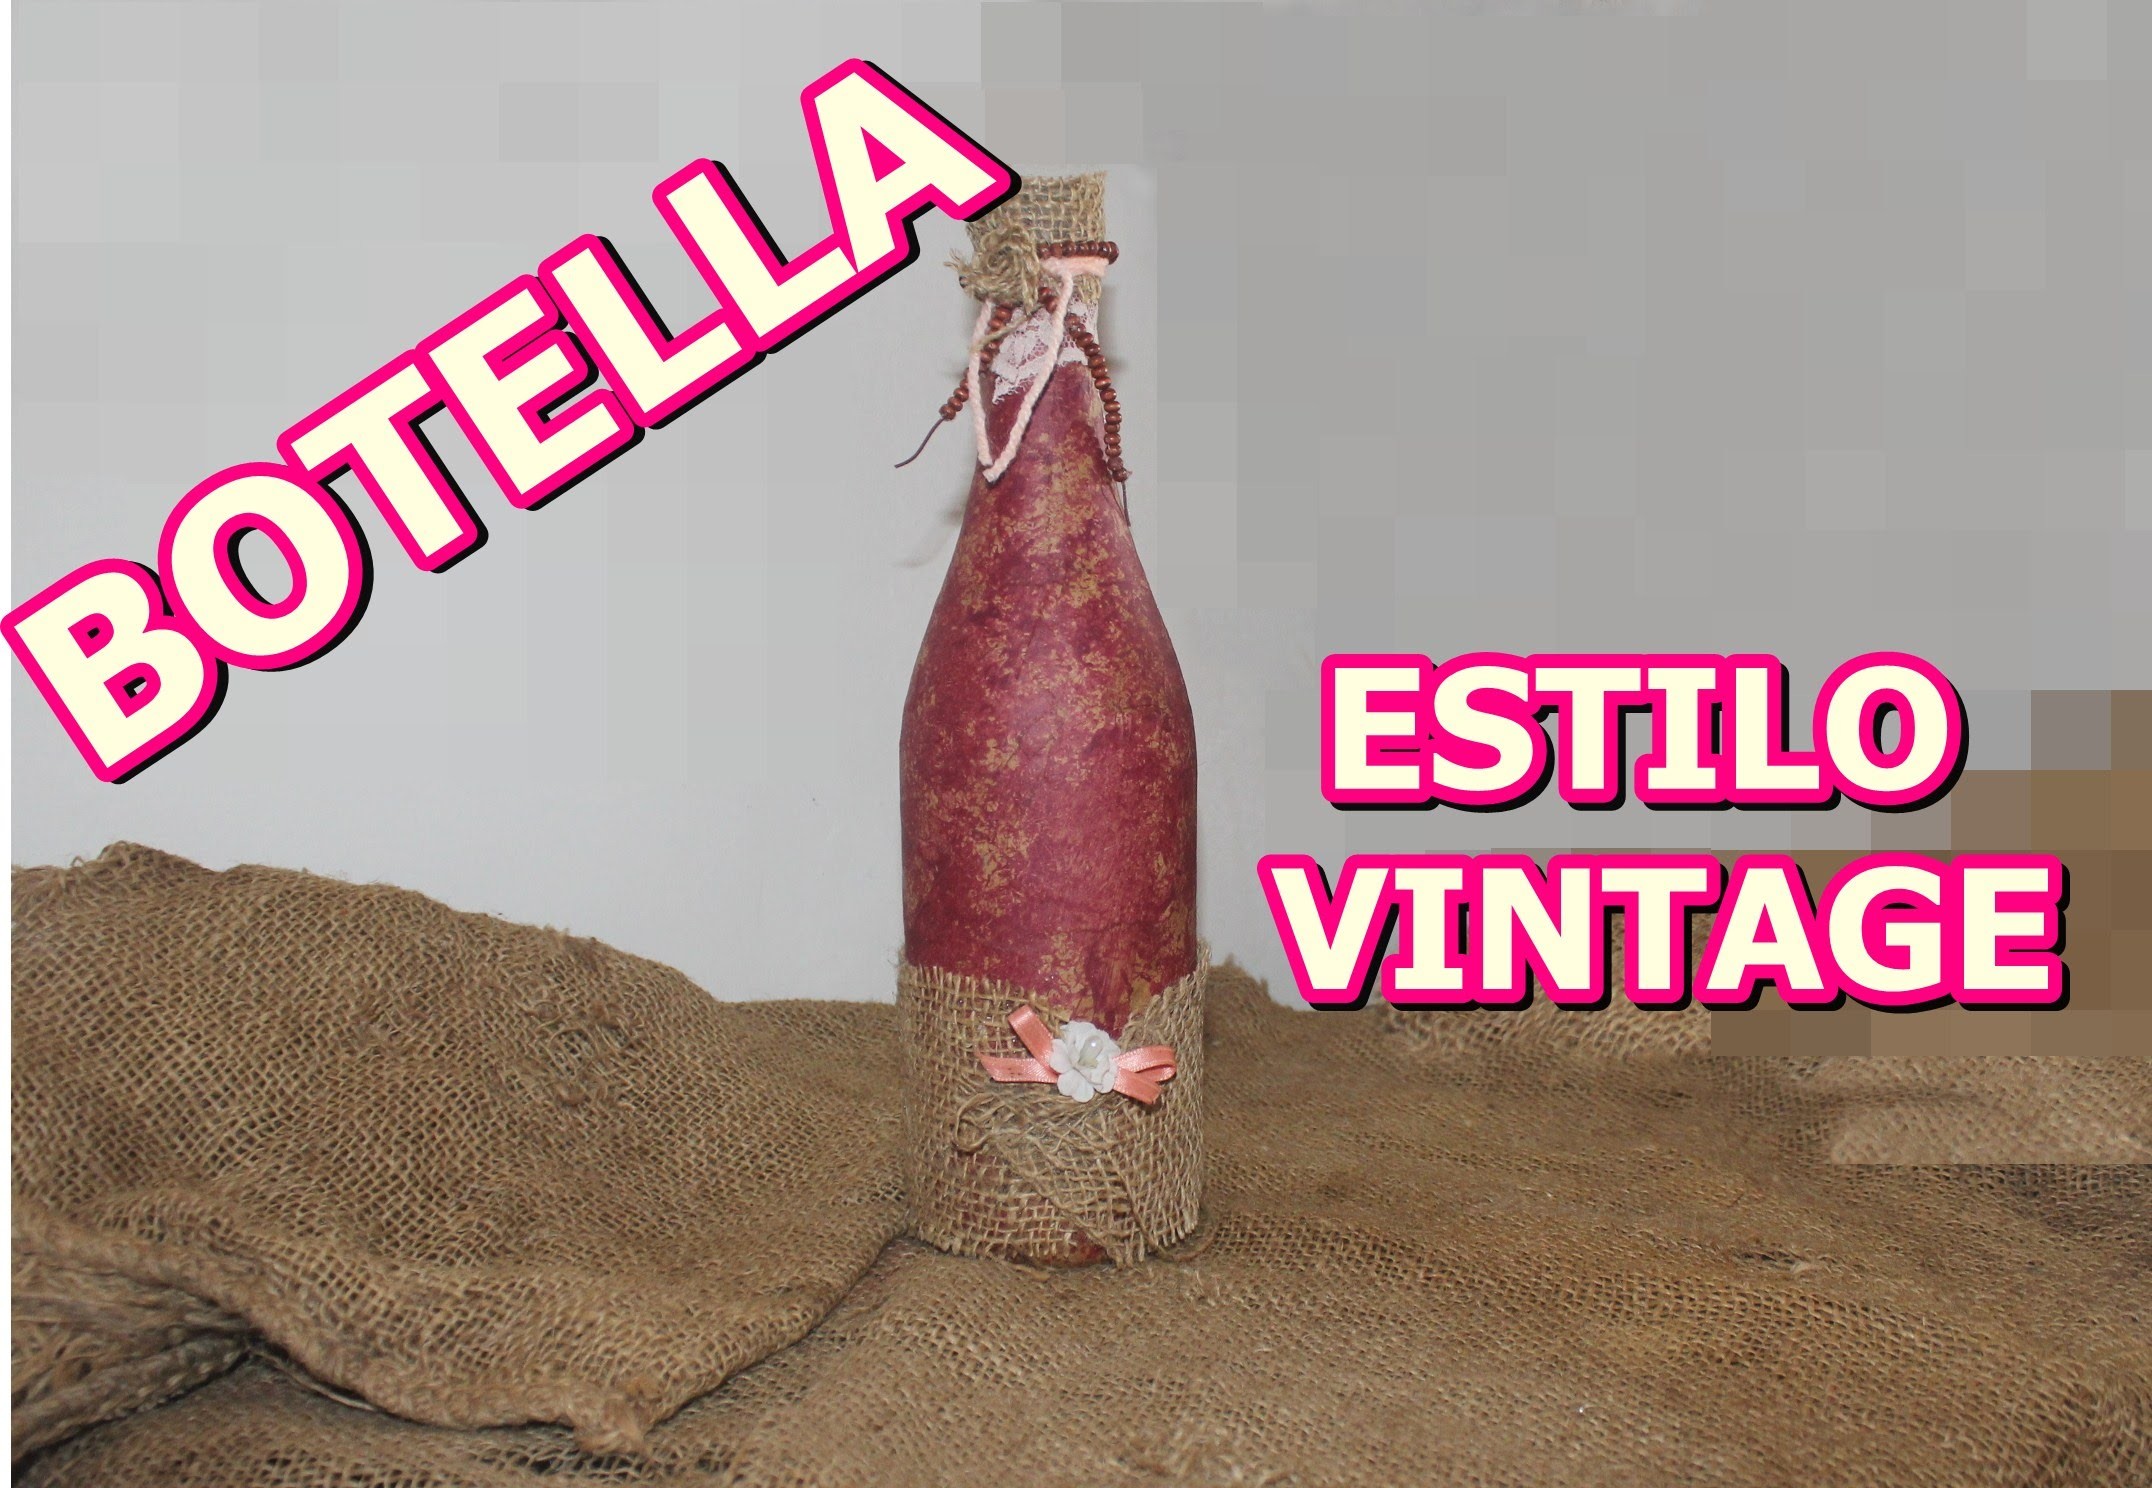 BOTELLA  DECORADA
VINTAGE - Vintage bottle